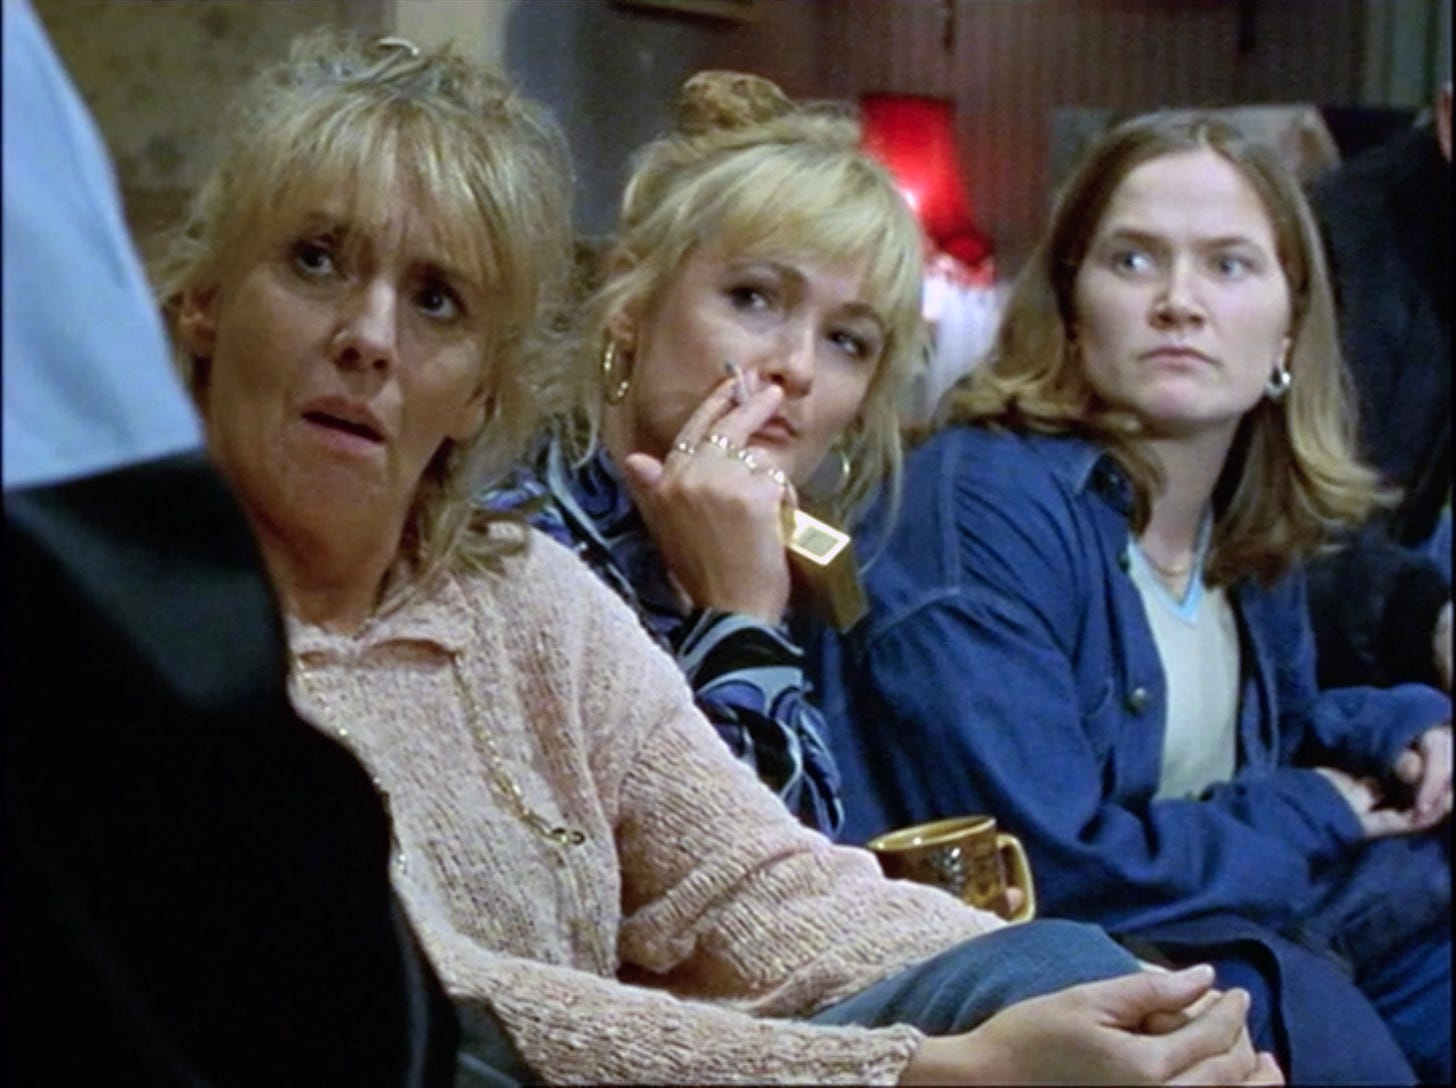 Barbara, Cheryl, and Denise look suspiciously at Twiggy